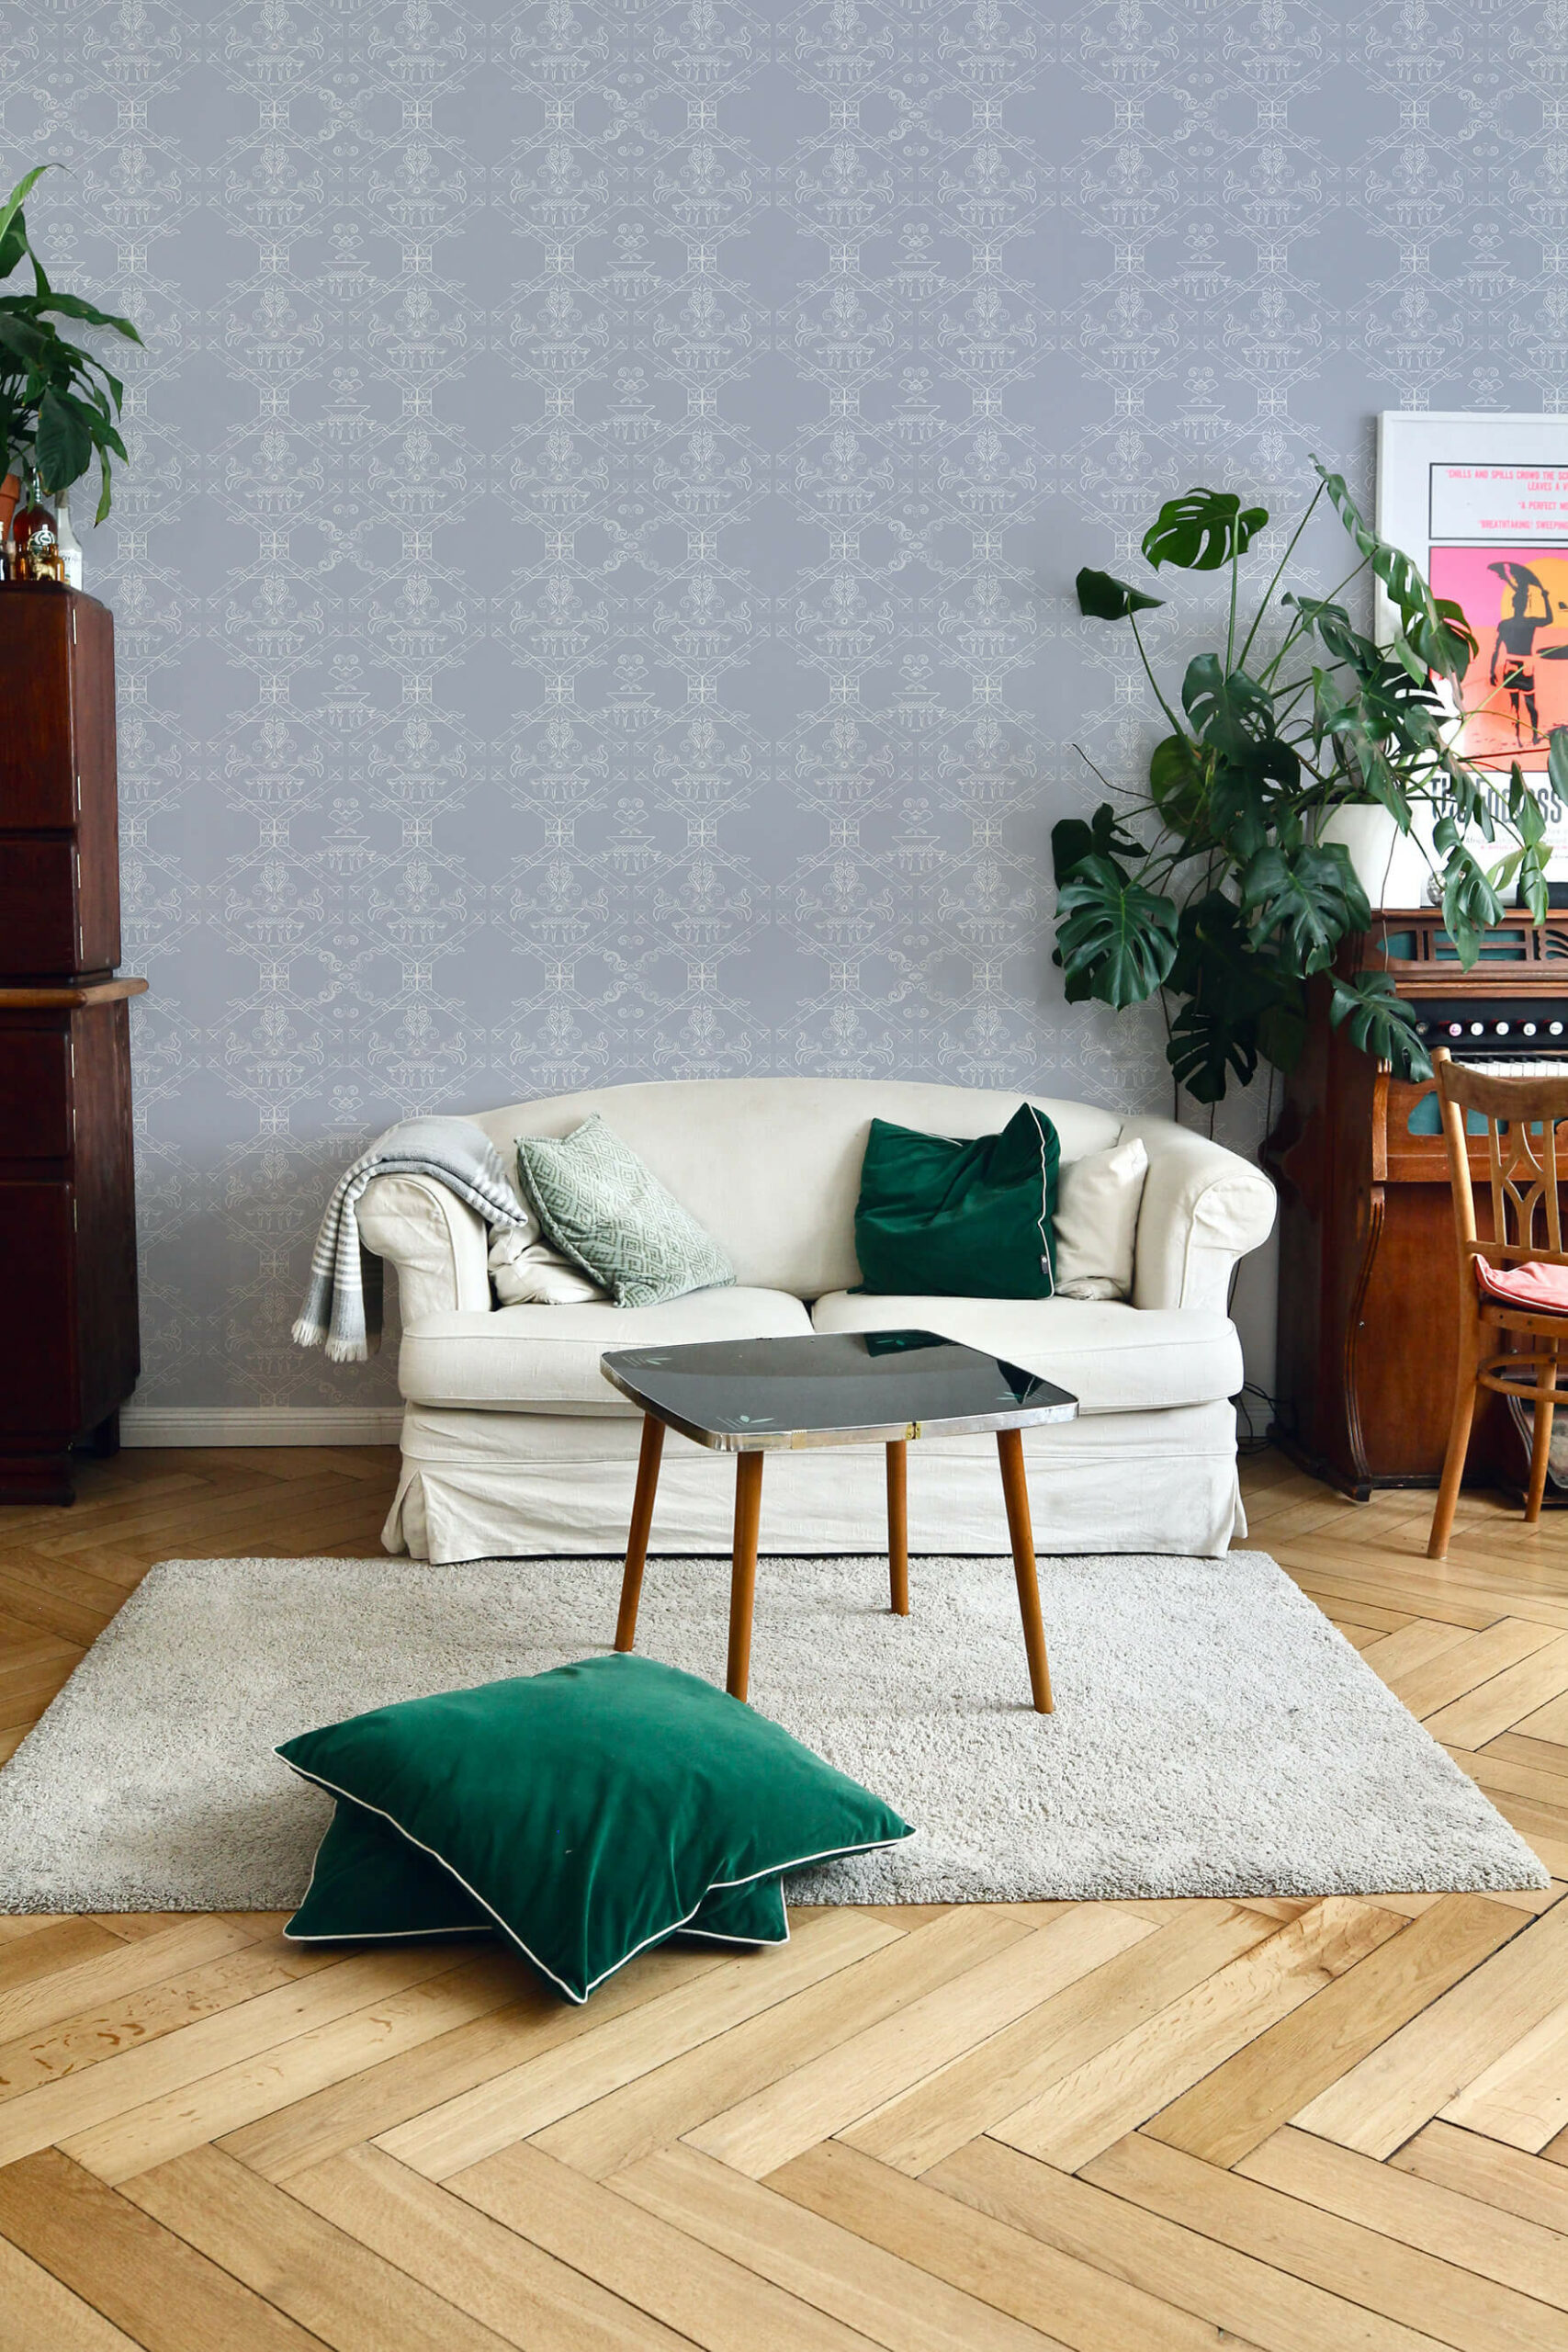 Ricamo-Powder Grey-MaVoix-wallpaper-interior-home-decor